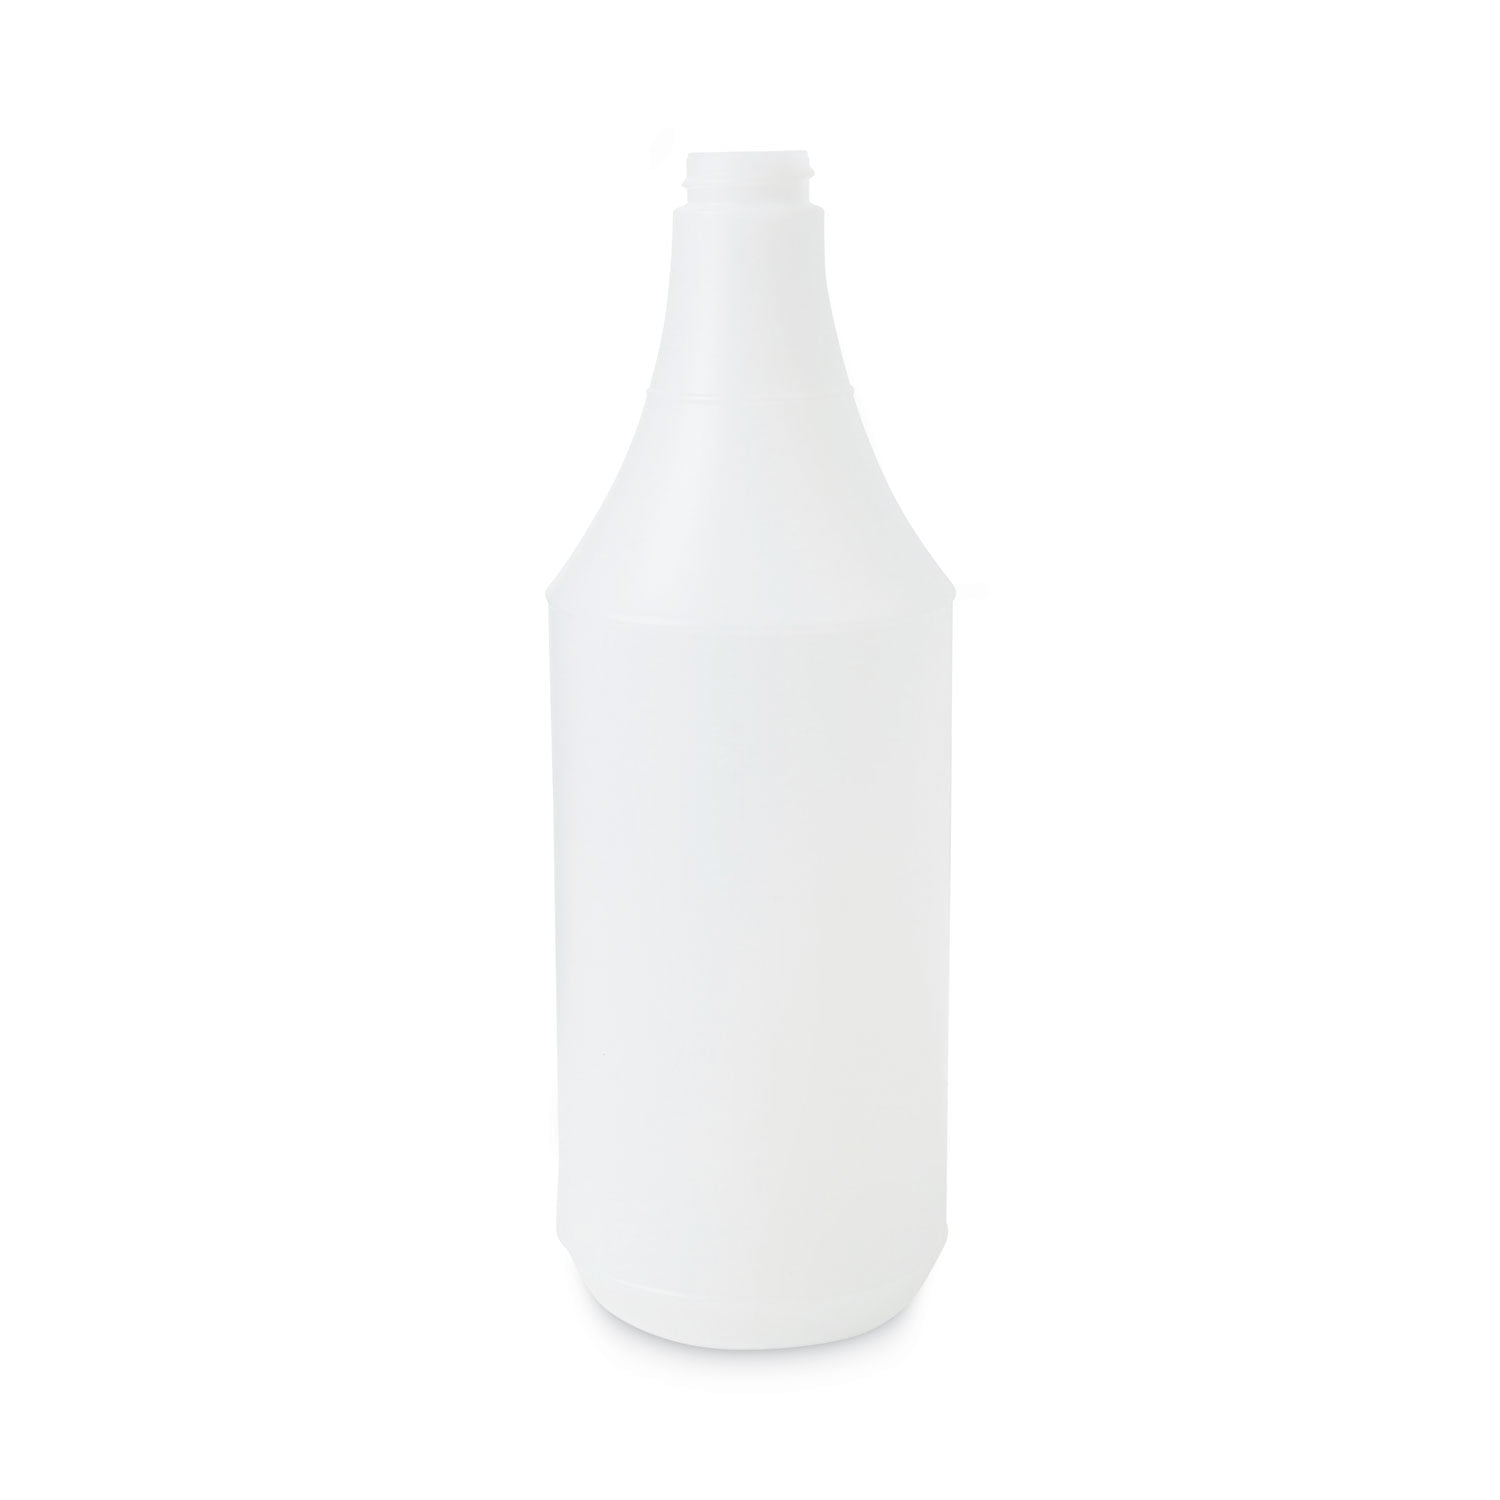 1/EA 32oz Empty HDPE Plastic Bottle Oil Vinegar Salad Dressing Storage Container 